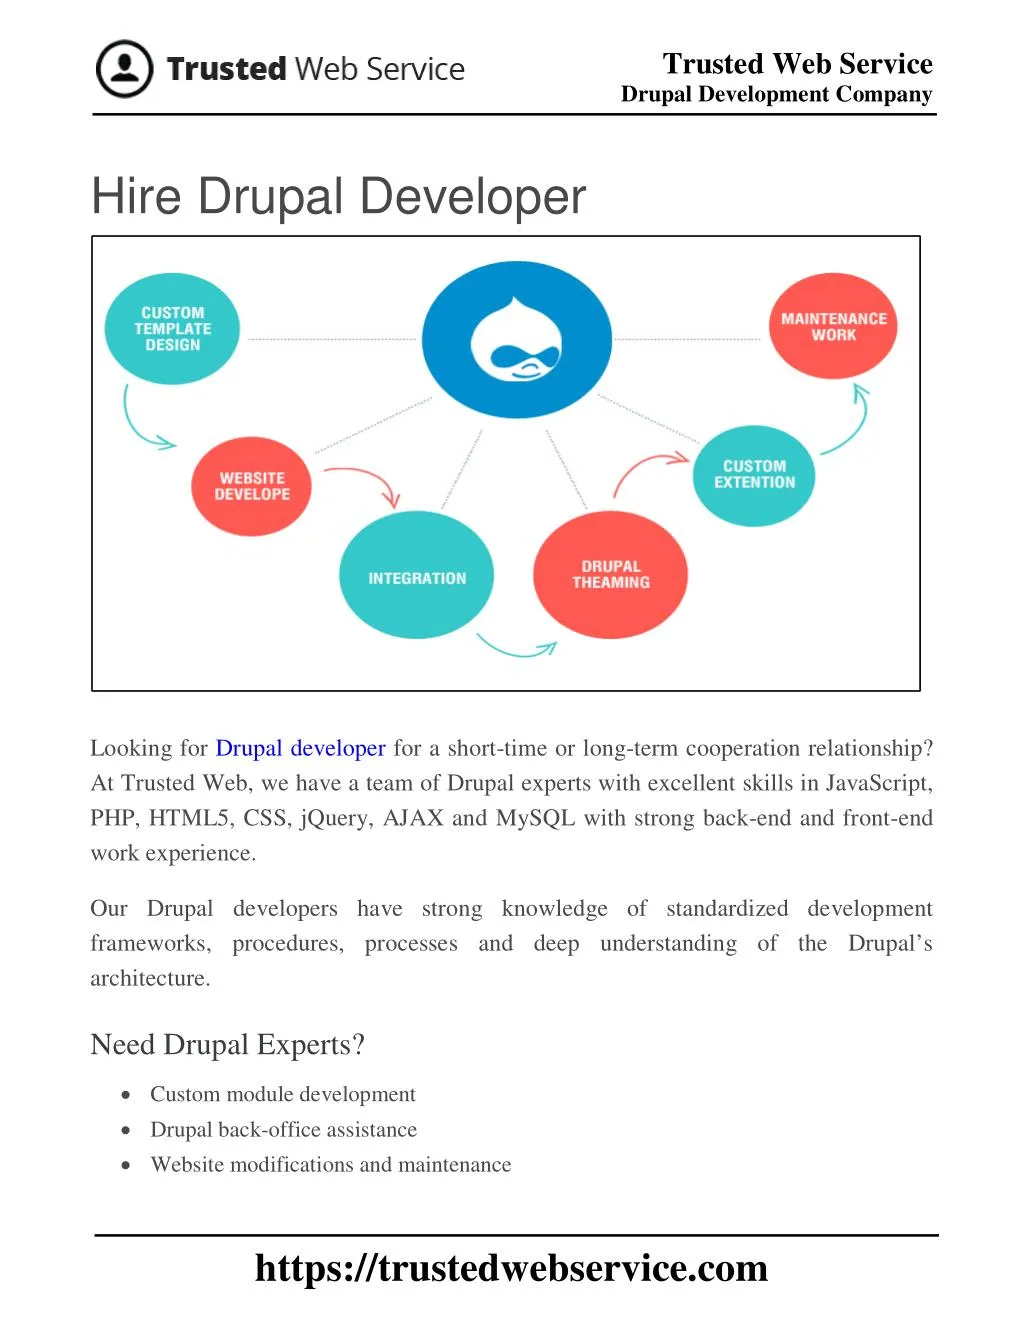 trusted web service drupal development company n.